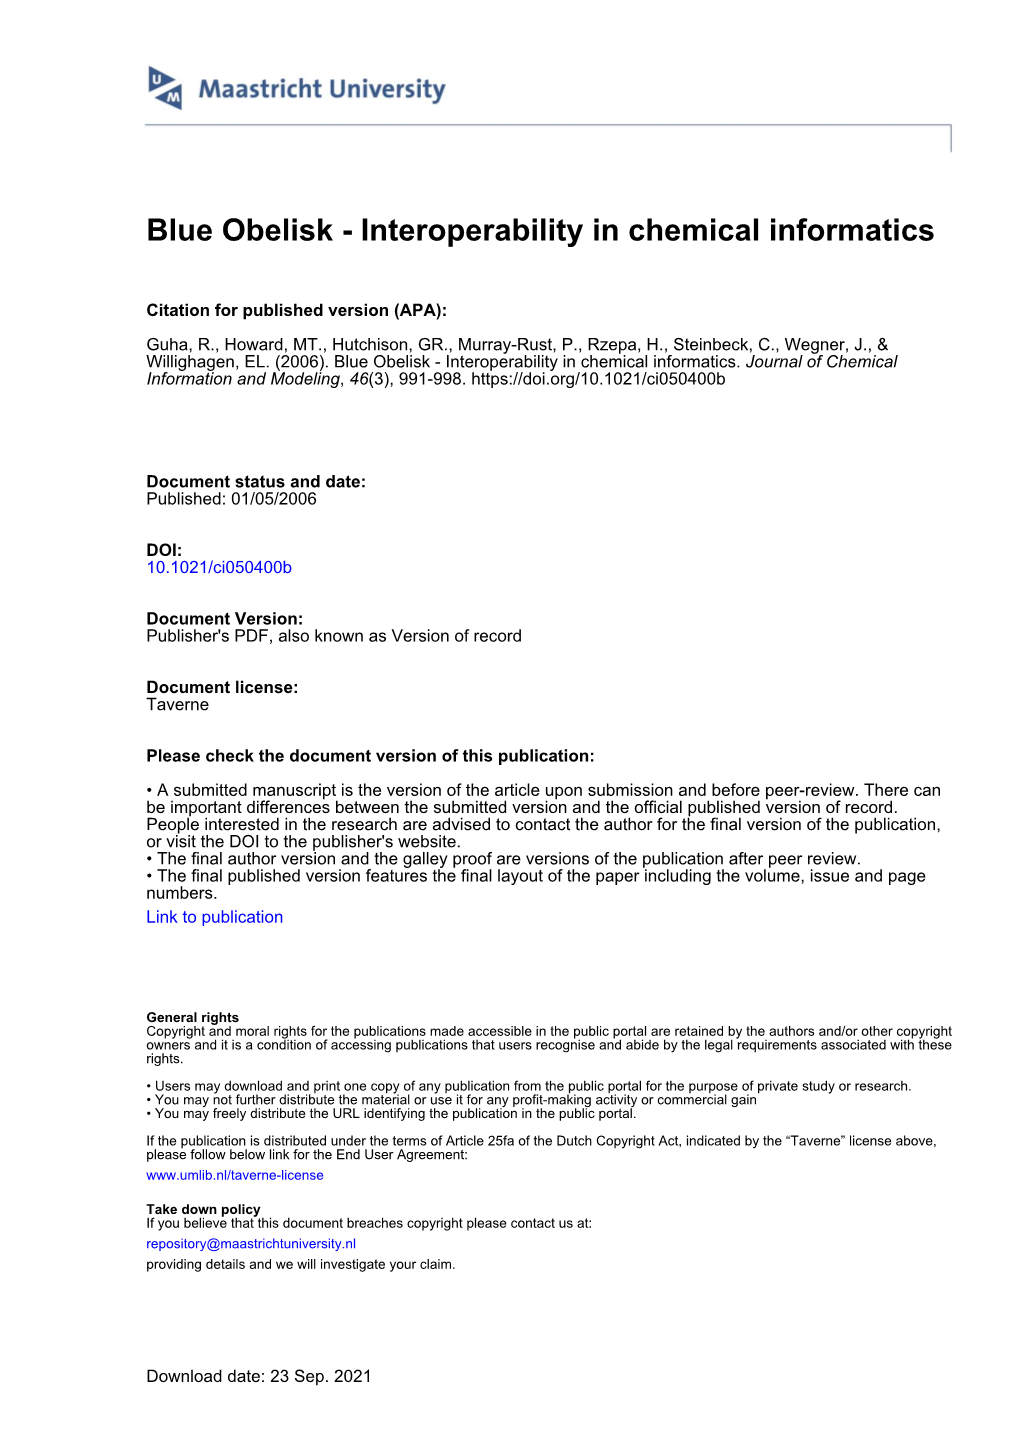 Blue Obelisk - Interoperability in Chemical Informatics